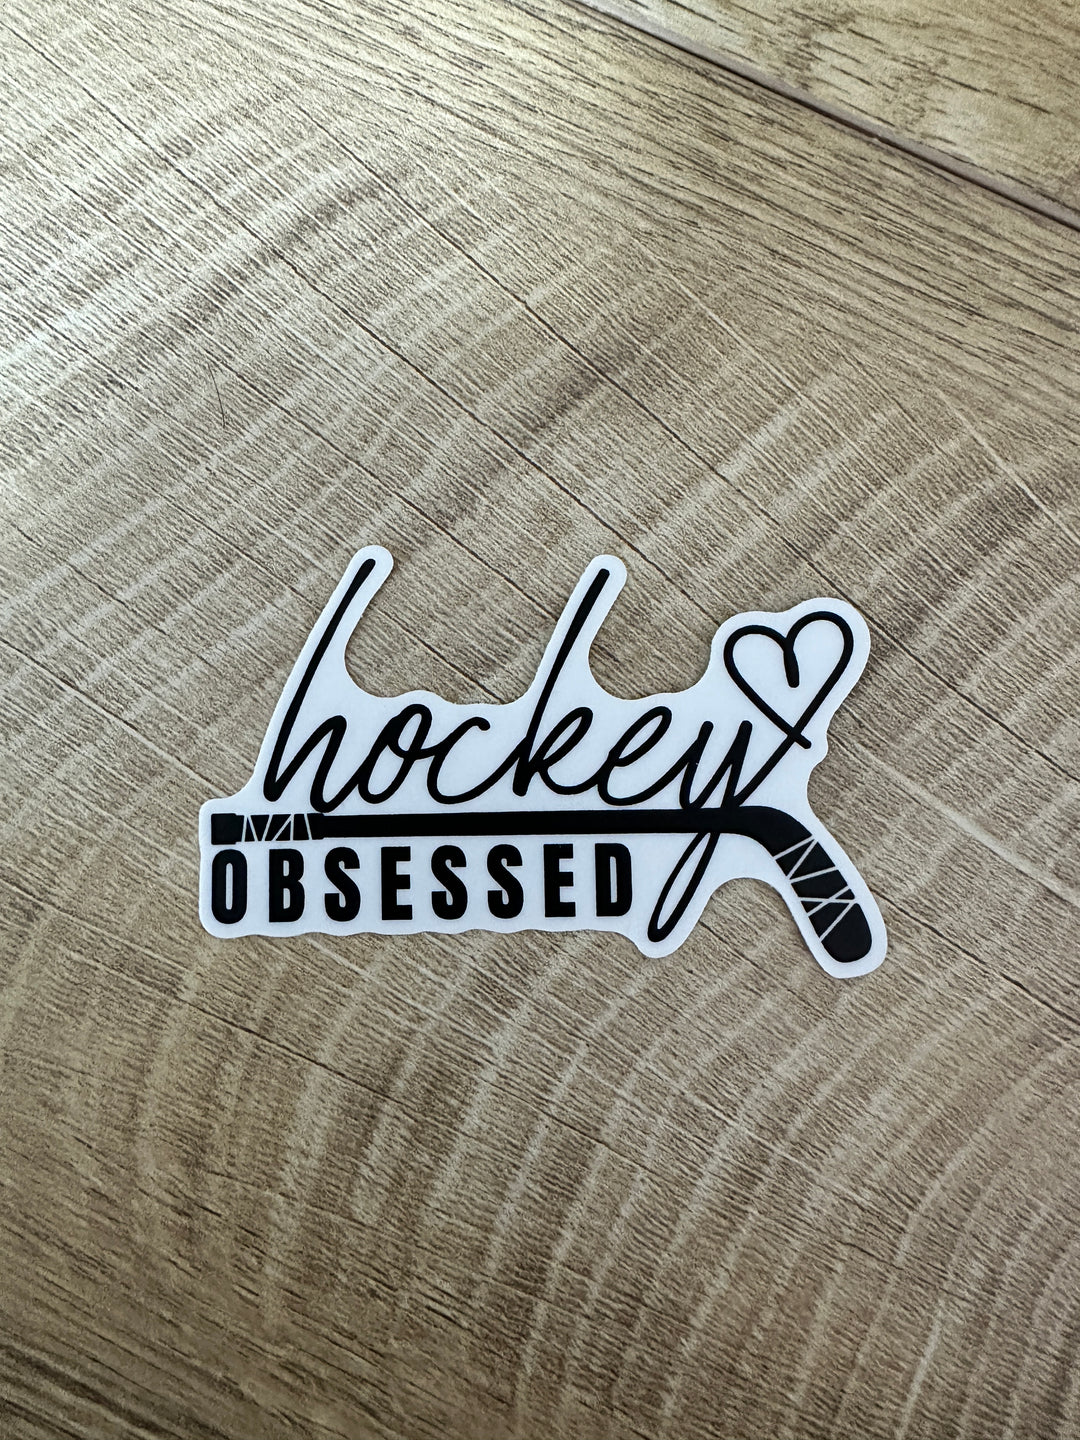 S Massery- Hockey Obsessed Sticker